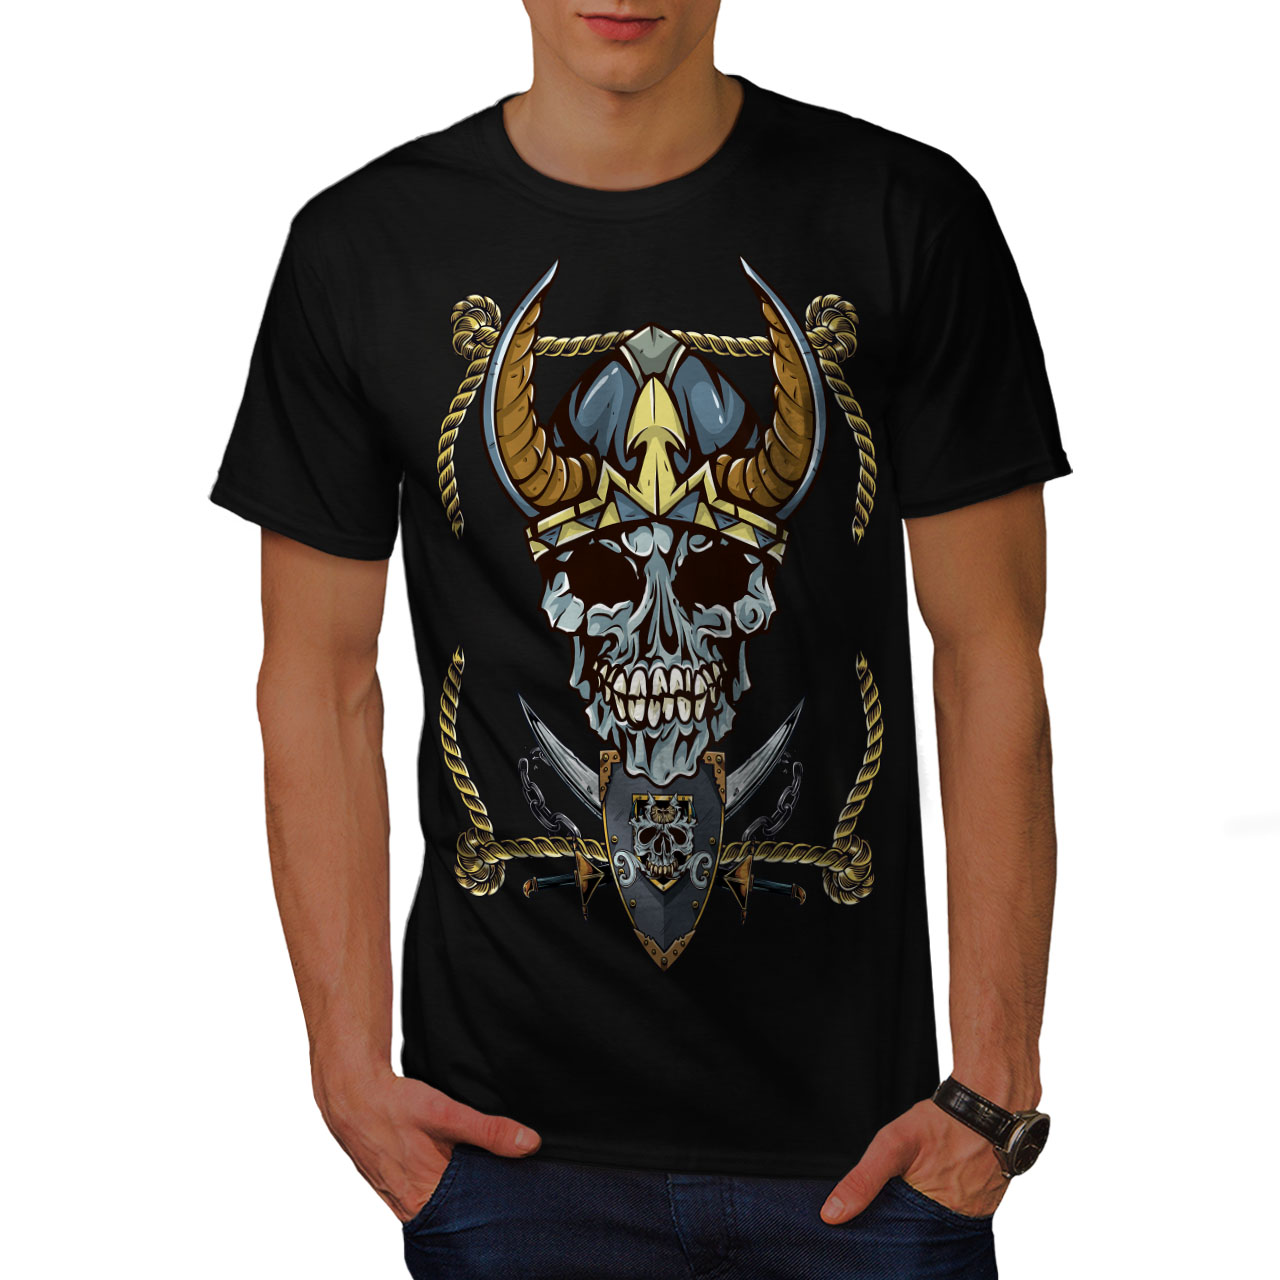 Wellcoda Old Pirate Metal Mens T-shirt Warrior Graphic Design Printed Tee 